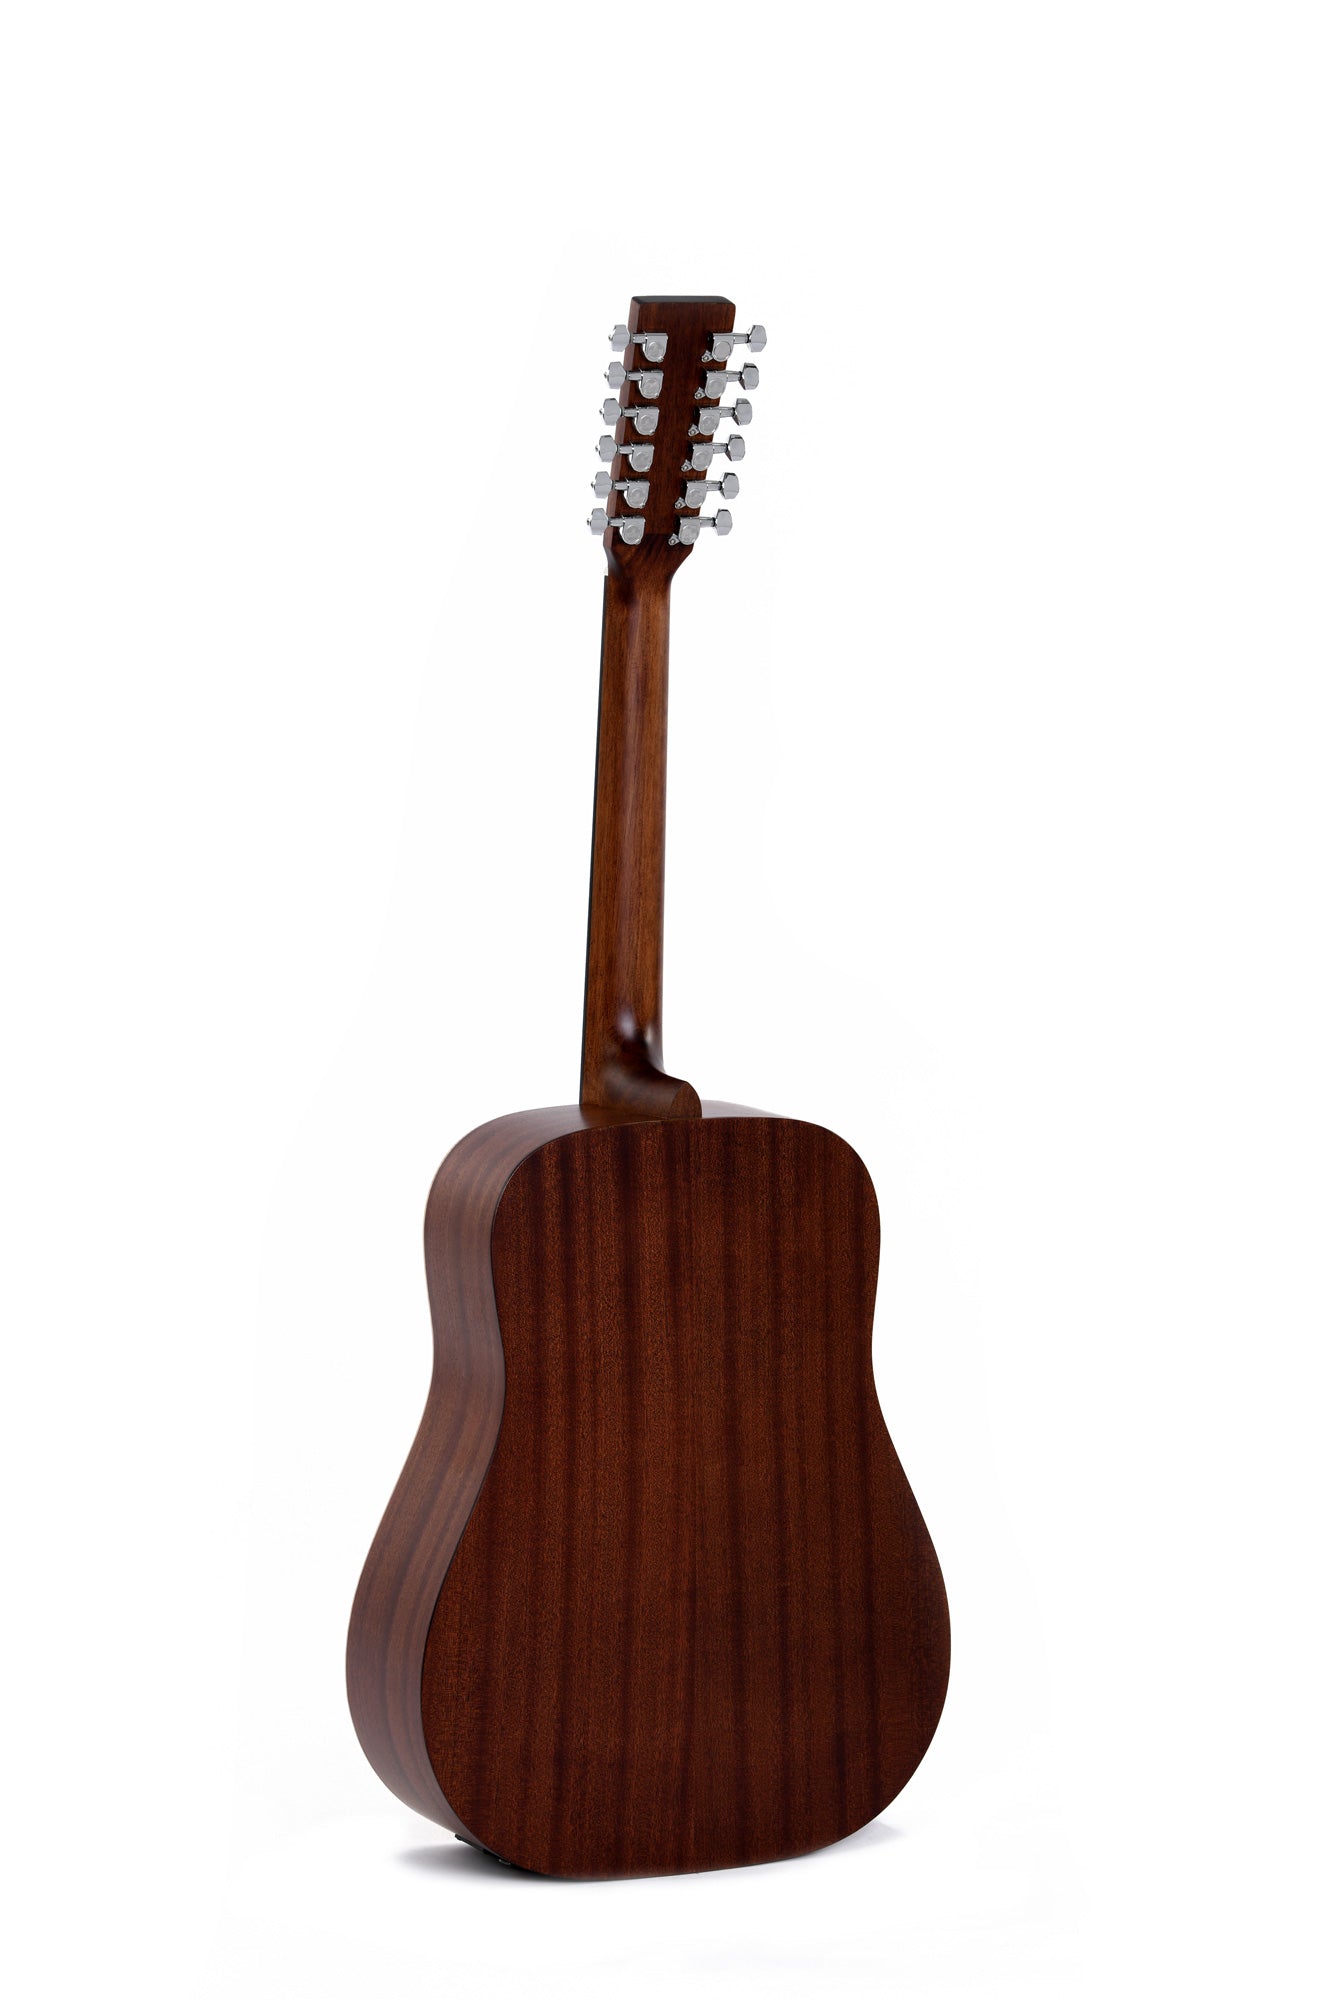 Sigma Guitars 12 String Electric Acoustic Guitar, Natural DM12E+